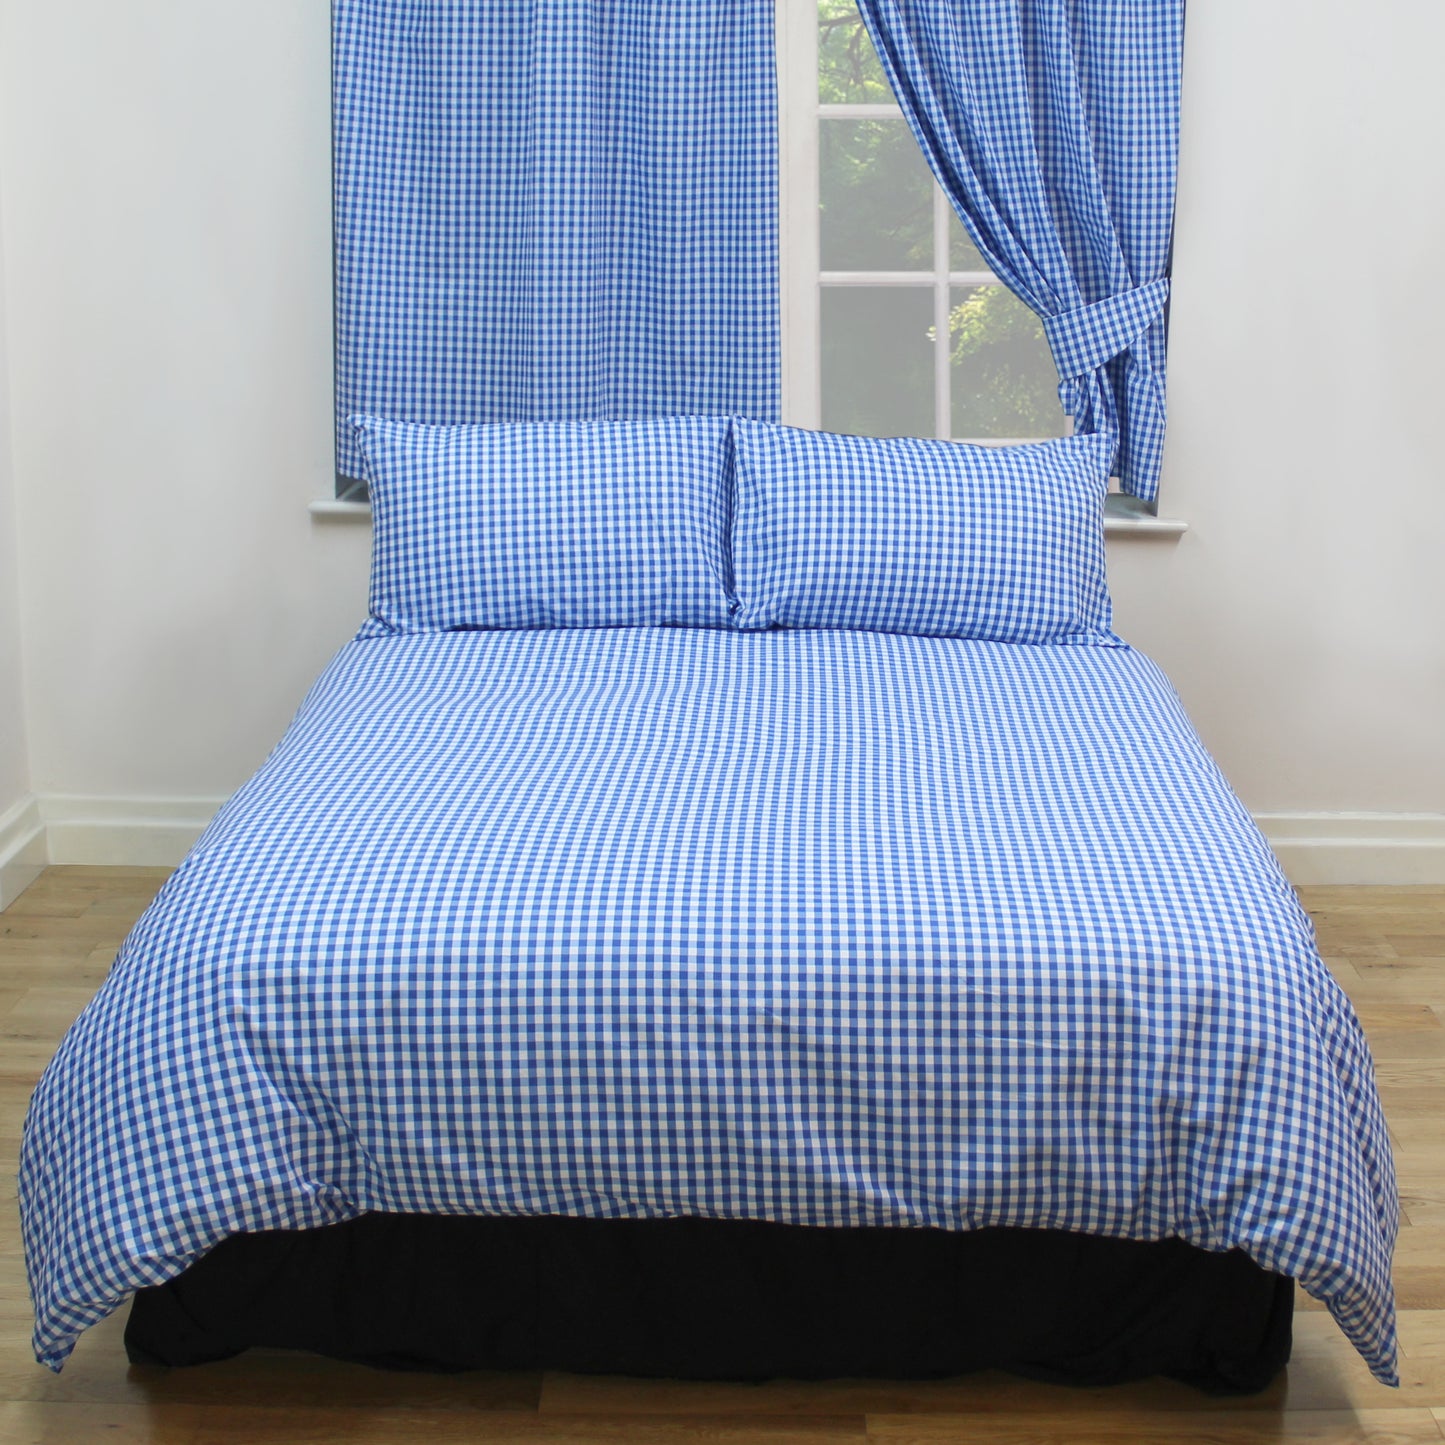 Single Bed Gingham Check Blue White Duvet Cover Set 100% Natural Cotton